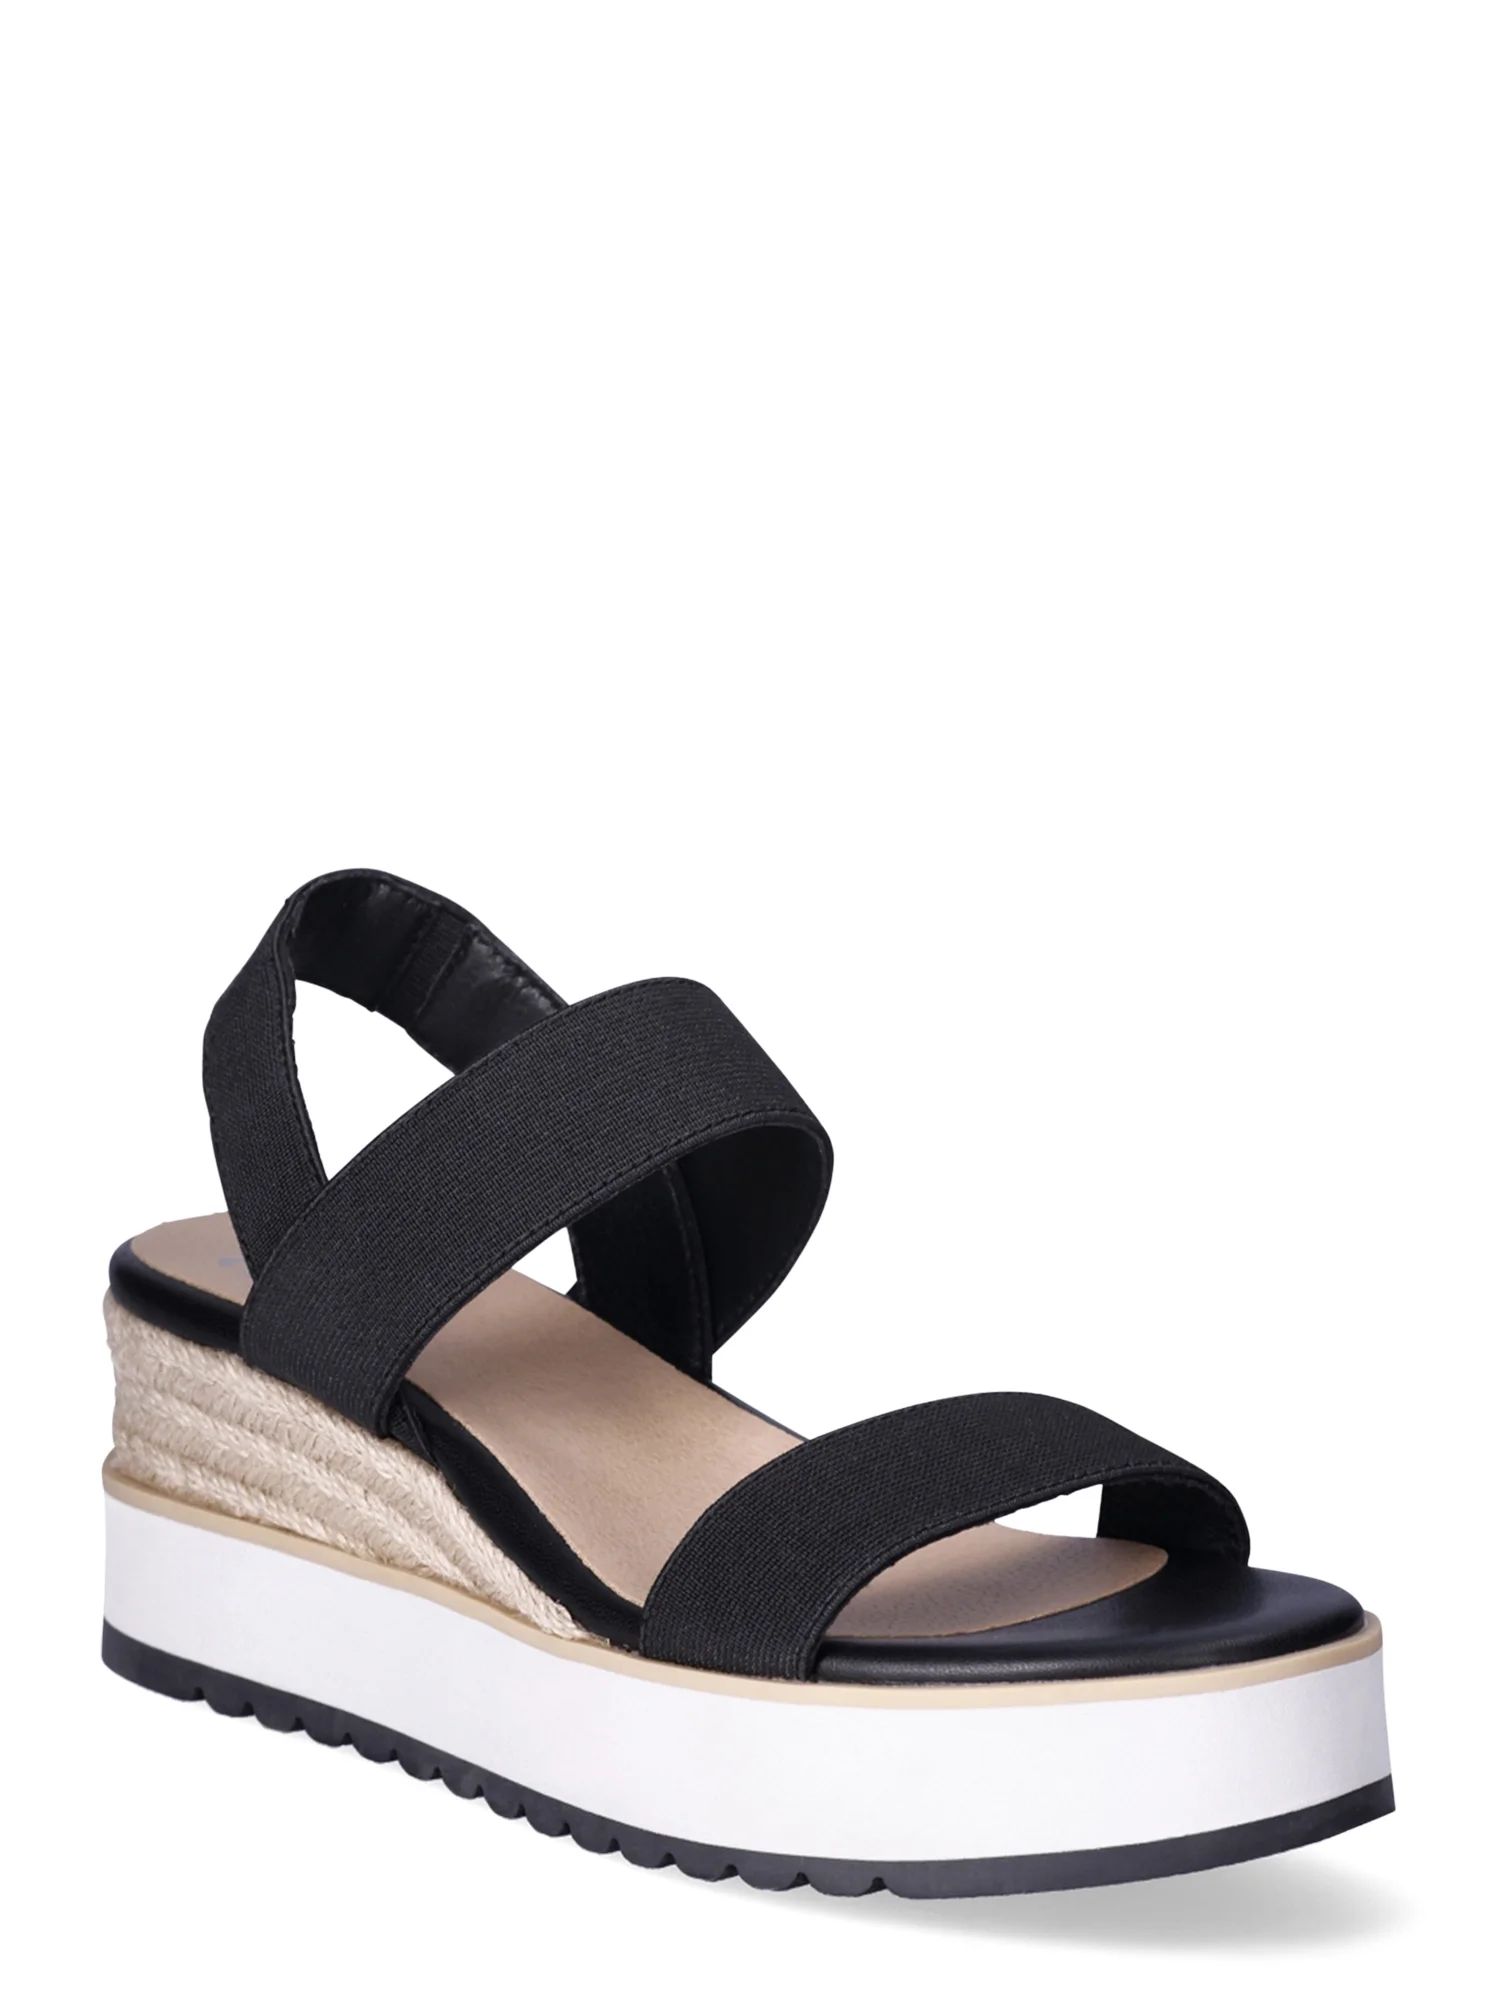 Madden NYC Women’s Talla Wedge Sandals | Walmart (US)